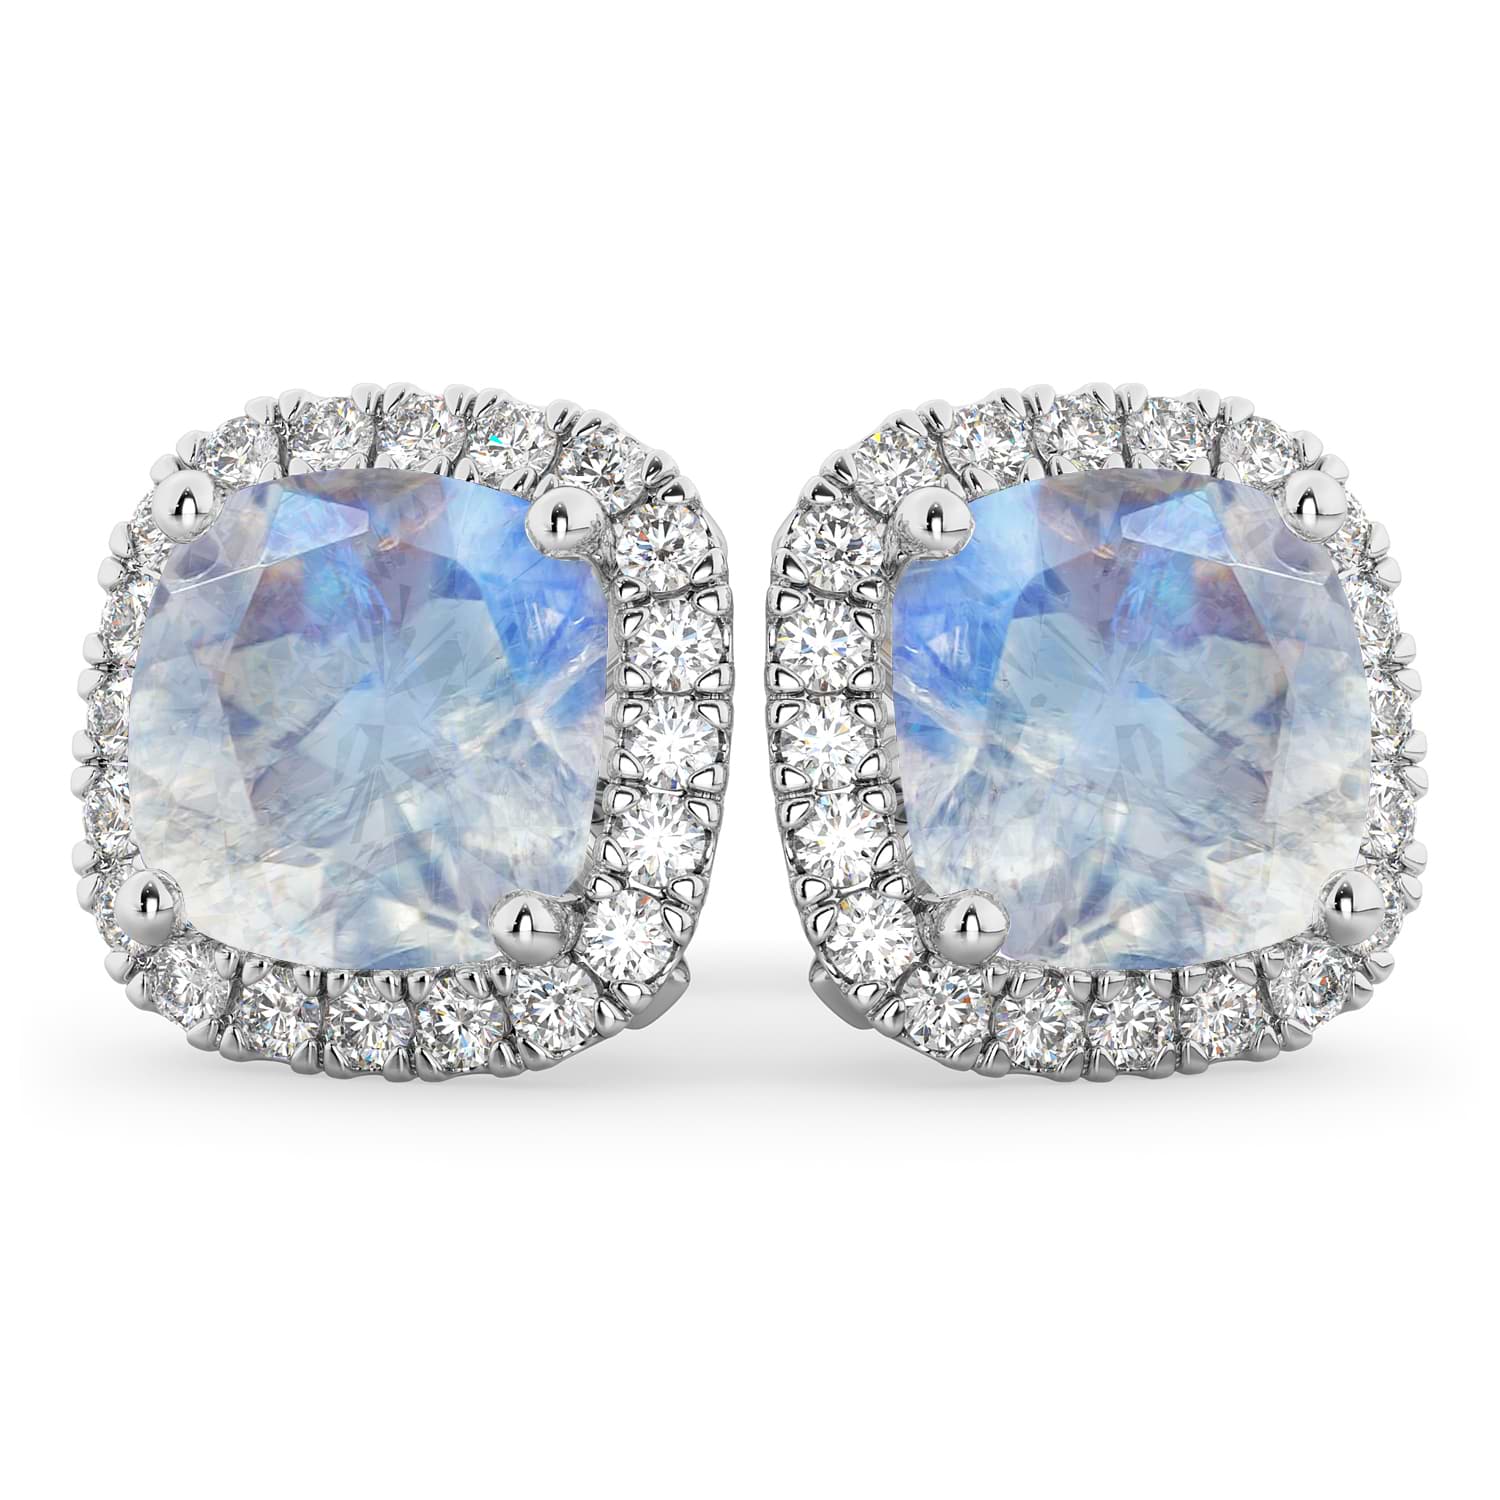 Halo Cushion Moonstone & Diamond Earrings 14k White Gold (4.04ct)